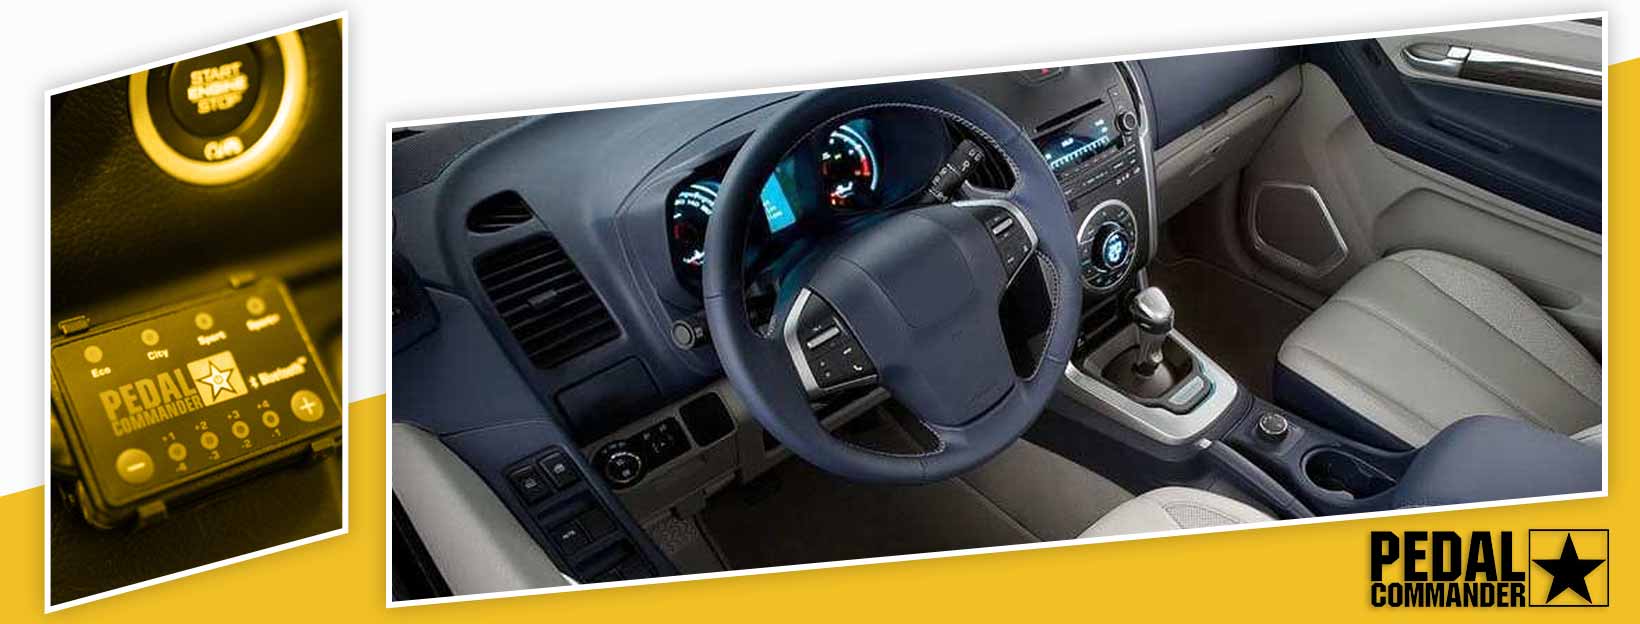 Pedal Commander for Chevrolet Trailblazer - interior